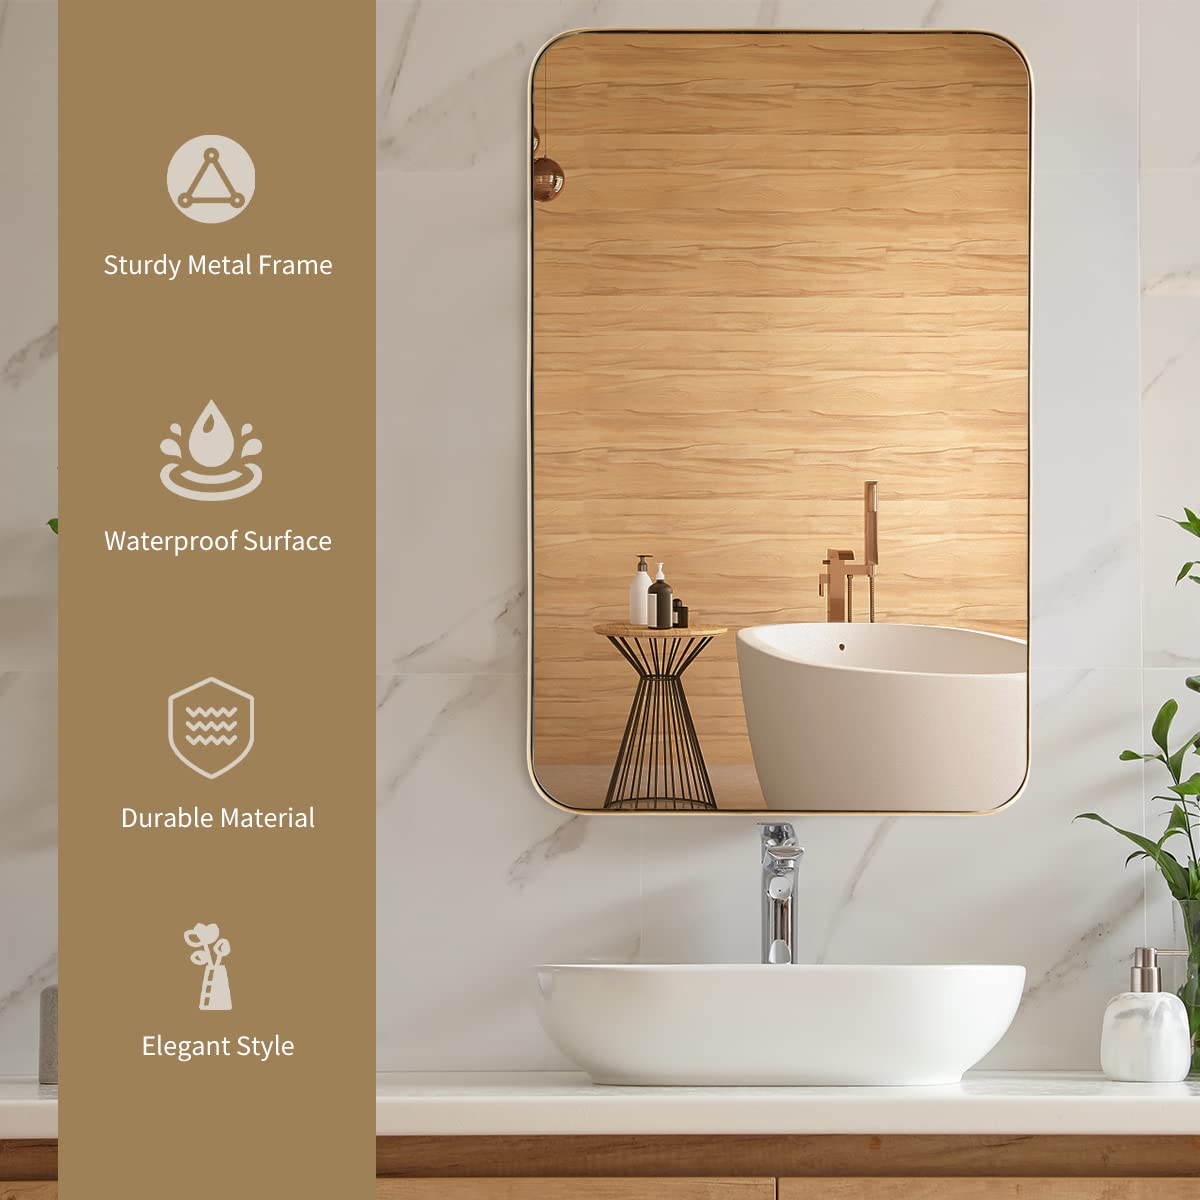 Giantex 80cm x 50cm Bathroom Wall Mirror, Rectangular Wall Hanging Mirror (Gold)